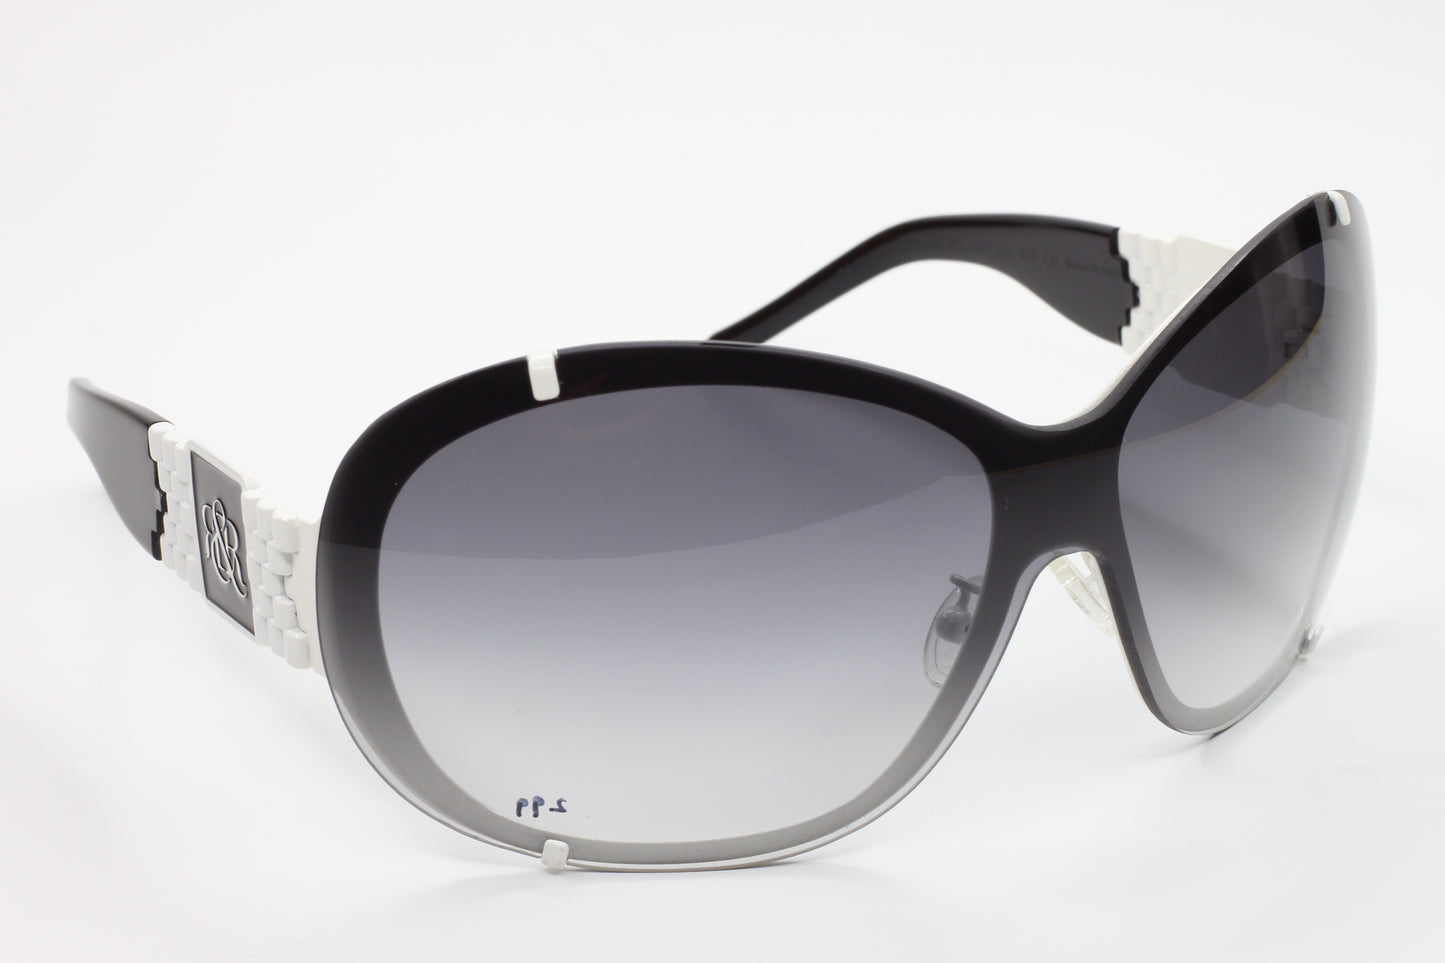 Rock & Republic RR502 02 White 848/1000 Limited Edition Luxury Sunglasses